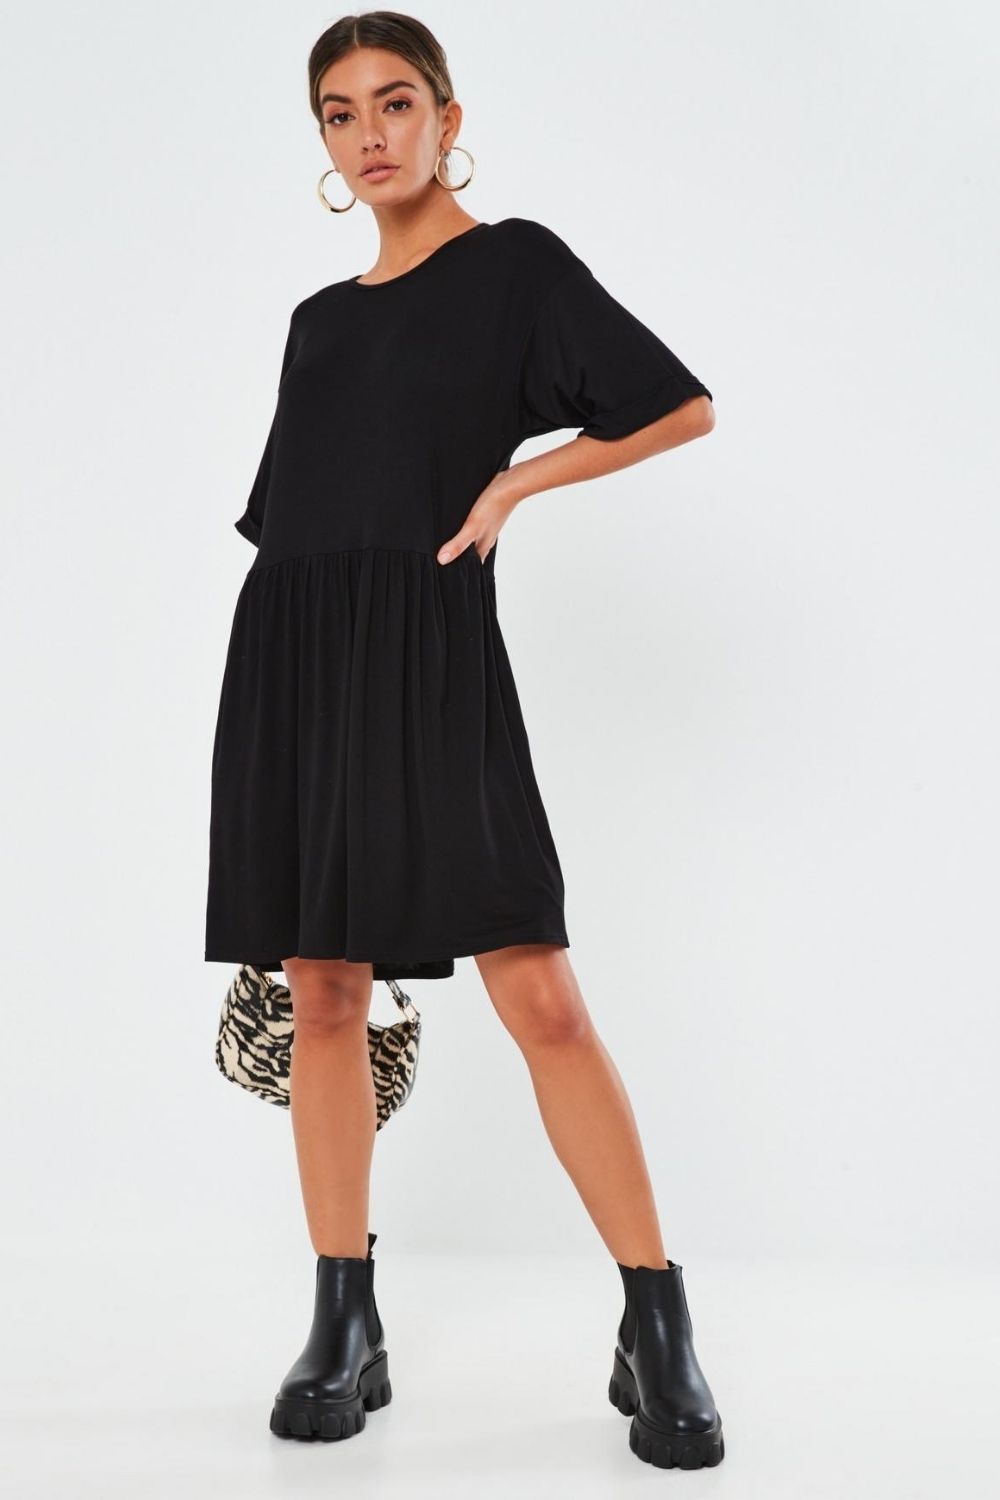 Black Knee Length Flare Dress